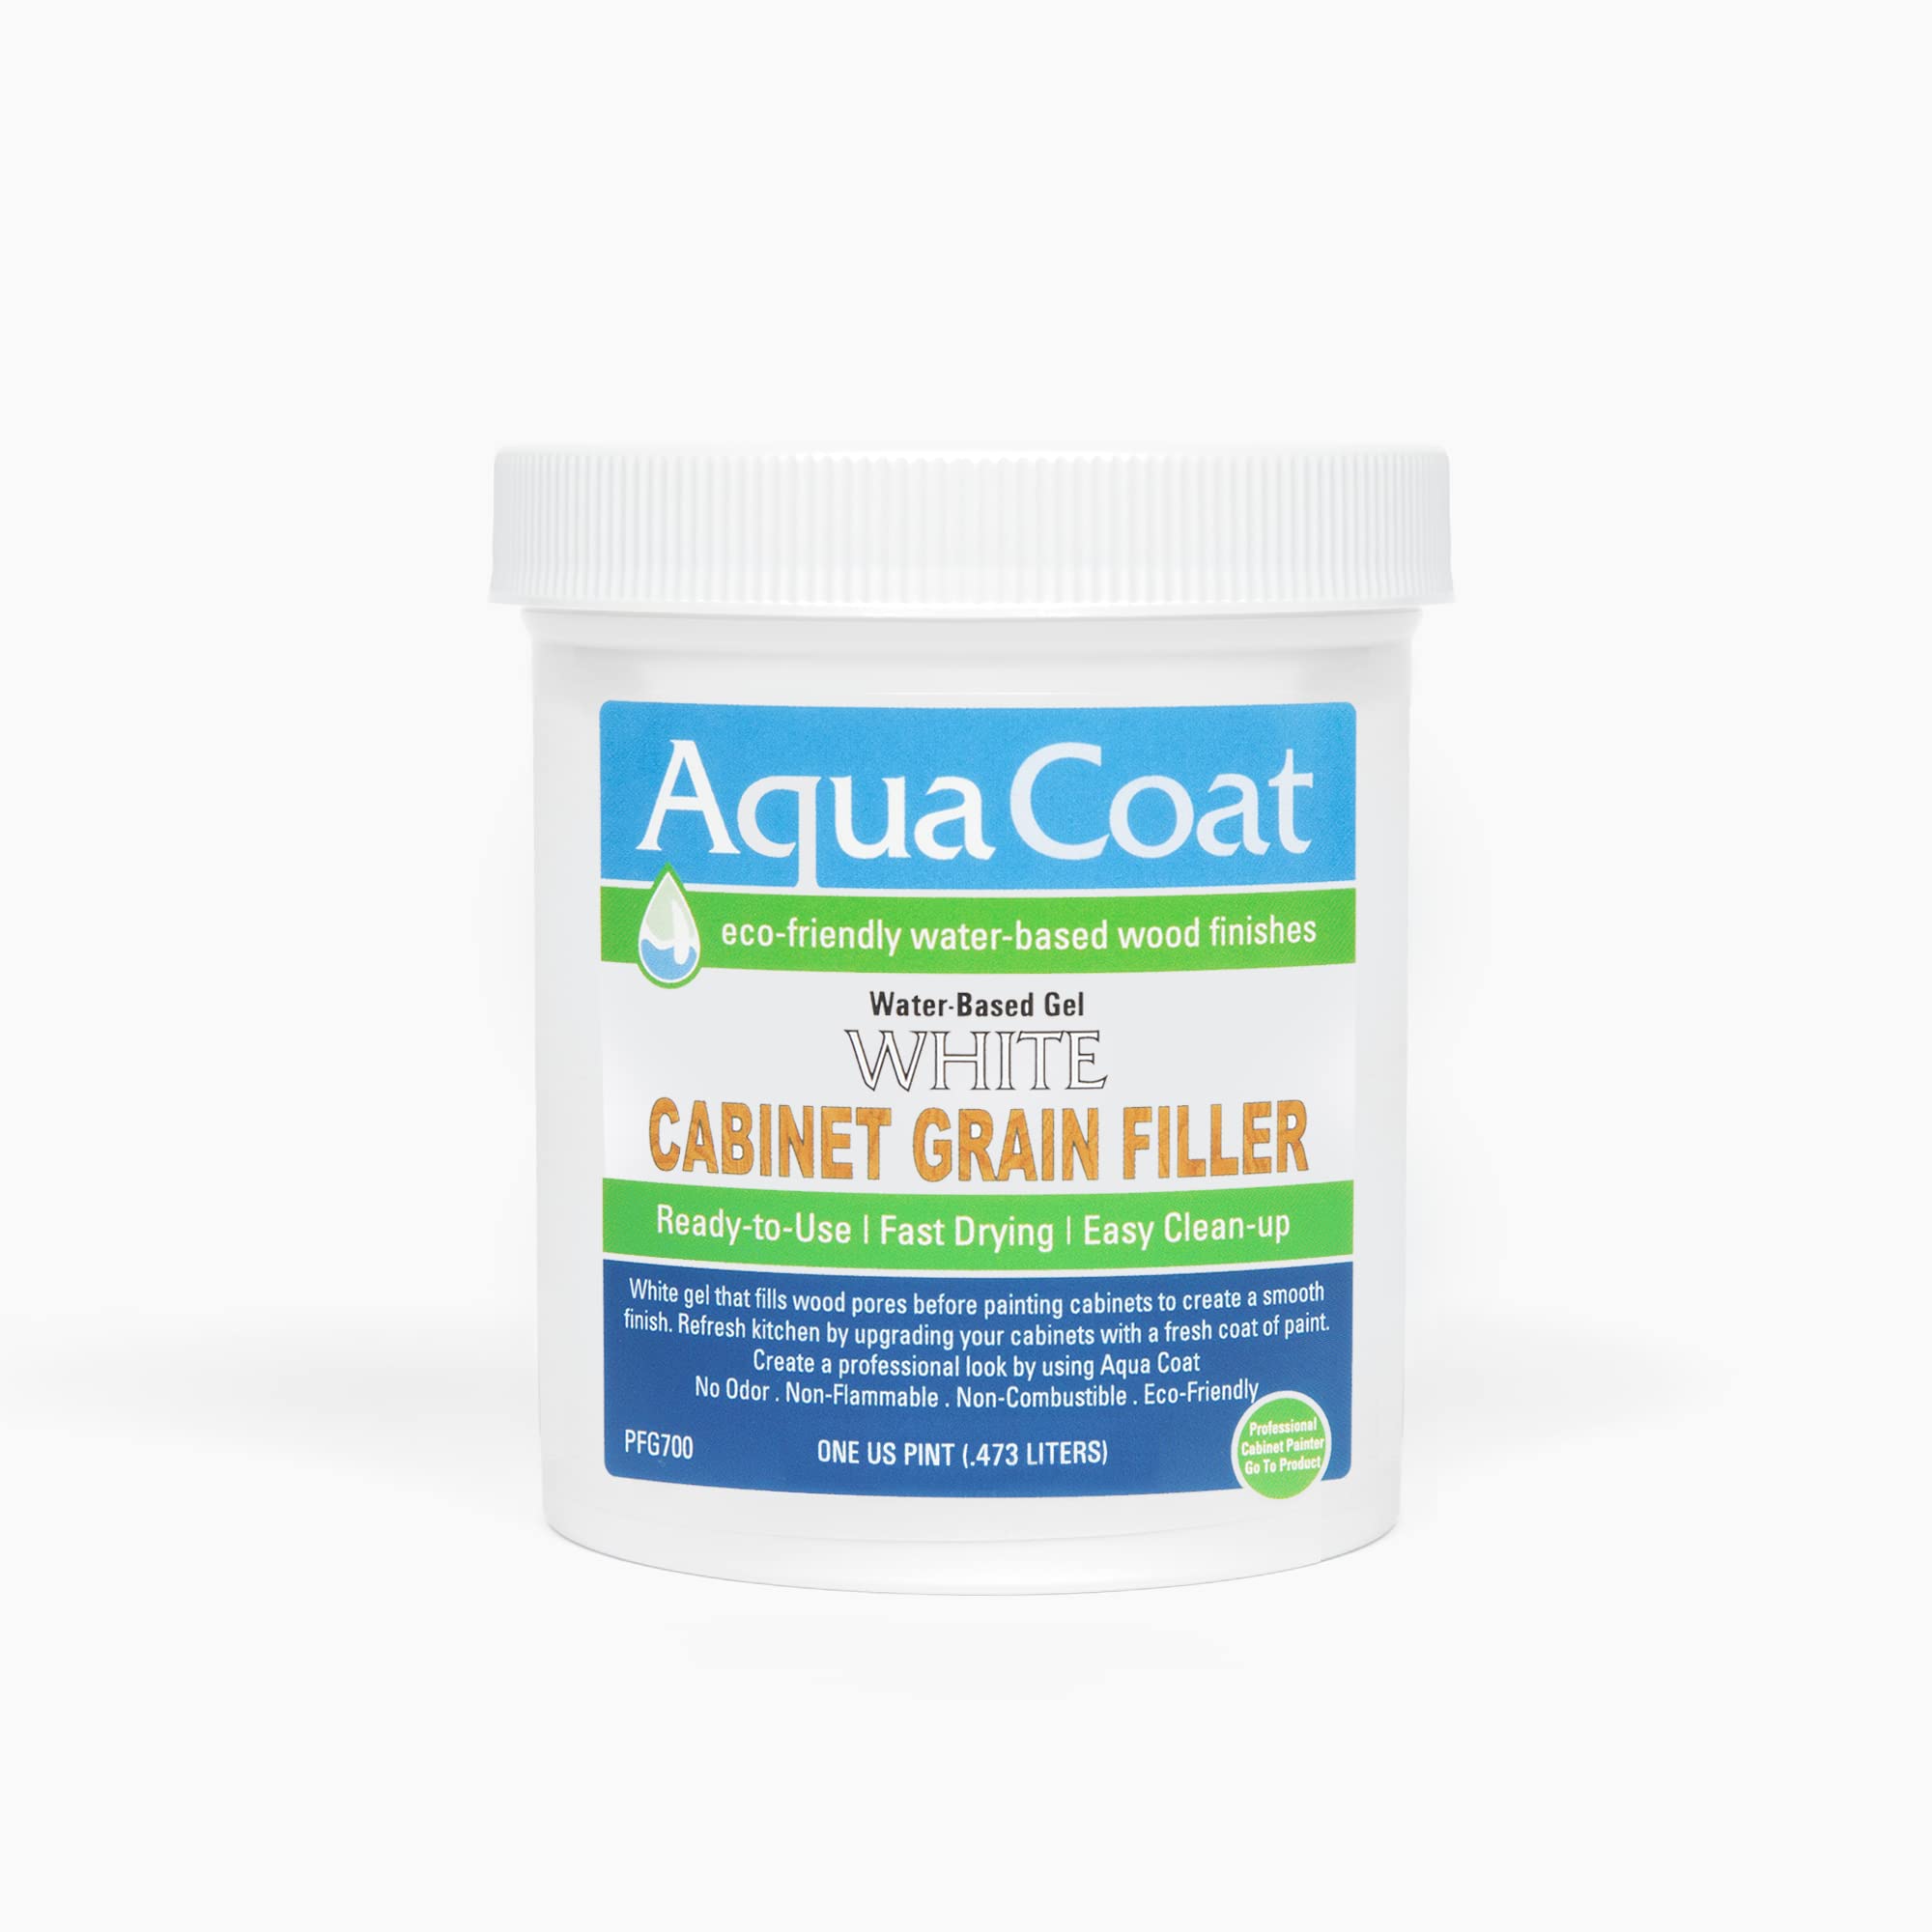 Aqua Coat Water Based White Cabinet Grain Filler Gel, Fast Drying, Low Odor White Wood Grain Filler, Premium Cabinet Grain Fille